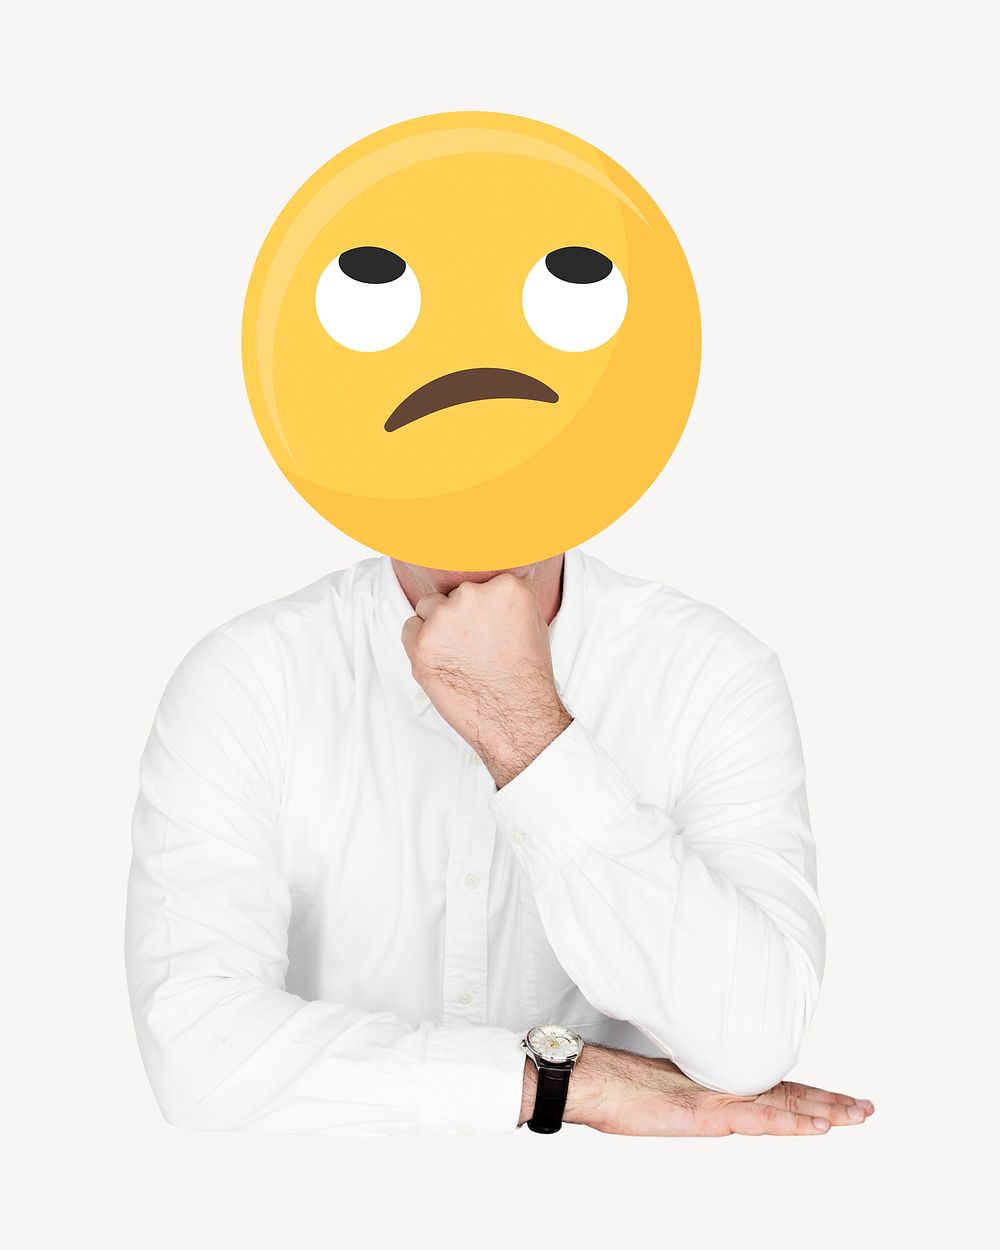 Unamused face emoji portrait on a man isolated image